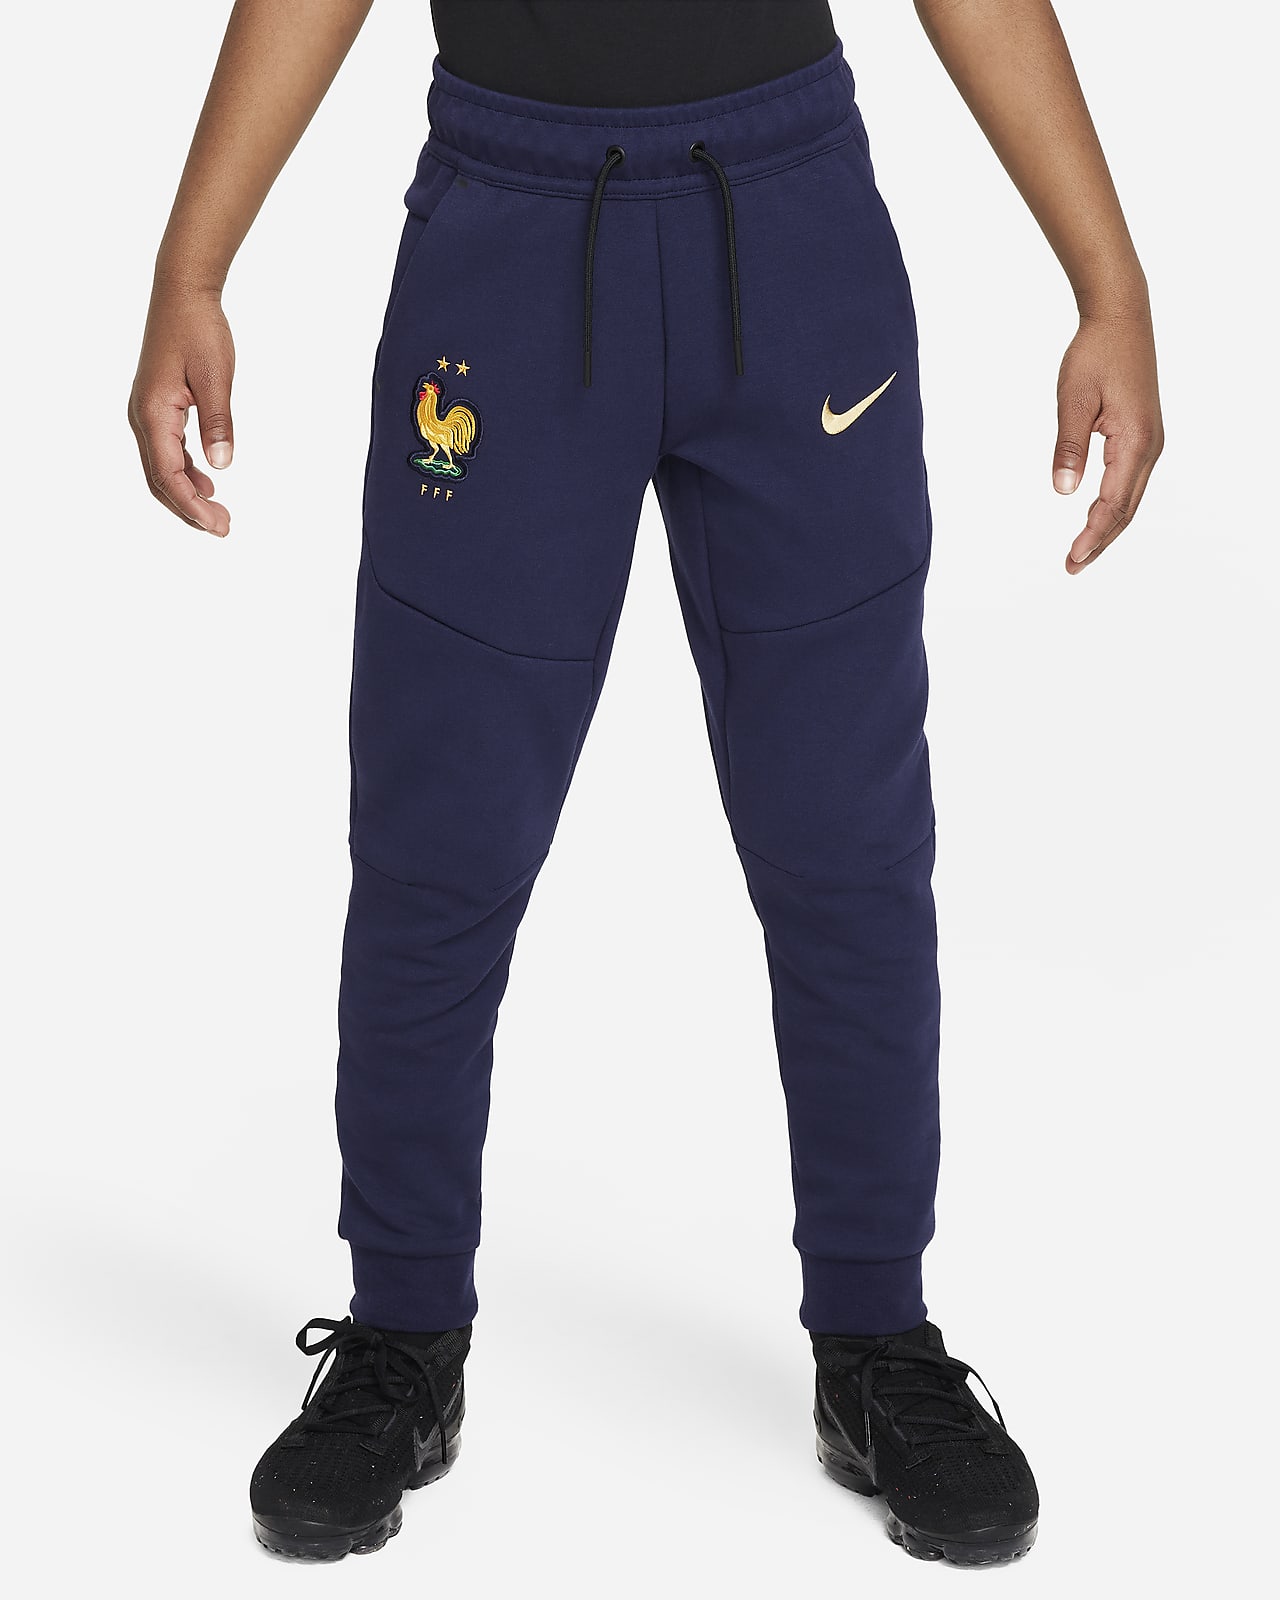 FFF Tech Fleece Pantalons de futbol Nike - Nen